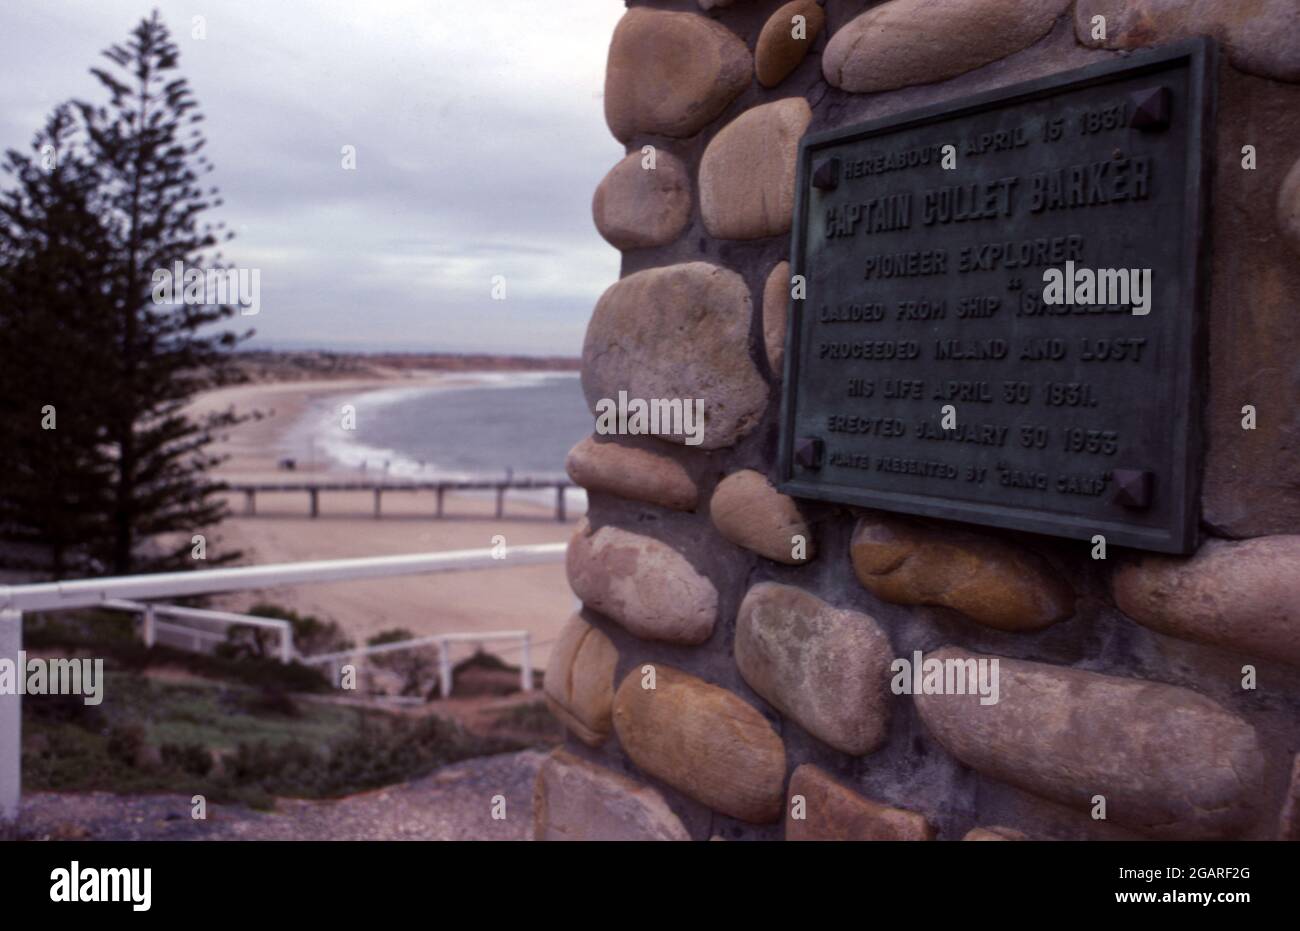 MONUMENT TO CAPTAIN COLLET BARKER, PIONEER EXPLORER, PORT NOARLUNGA, SOUTH AUSTRALIA. Stock Photo